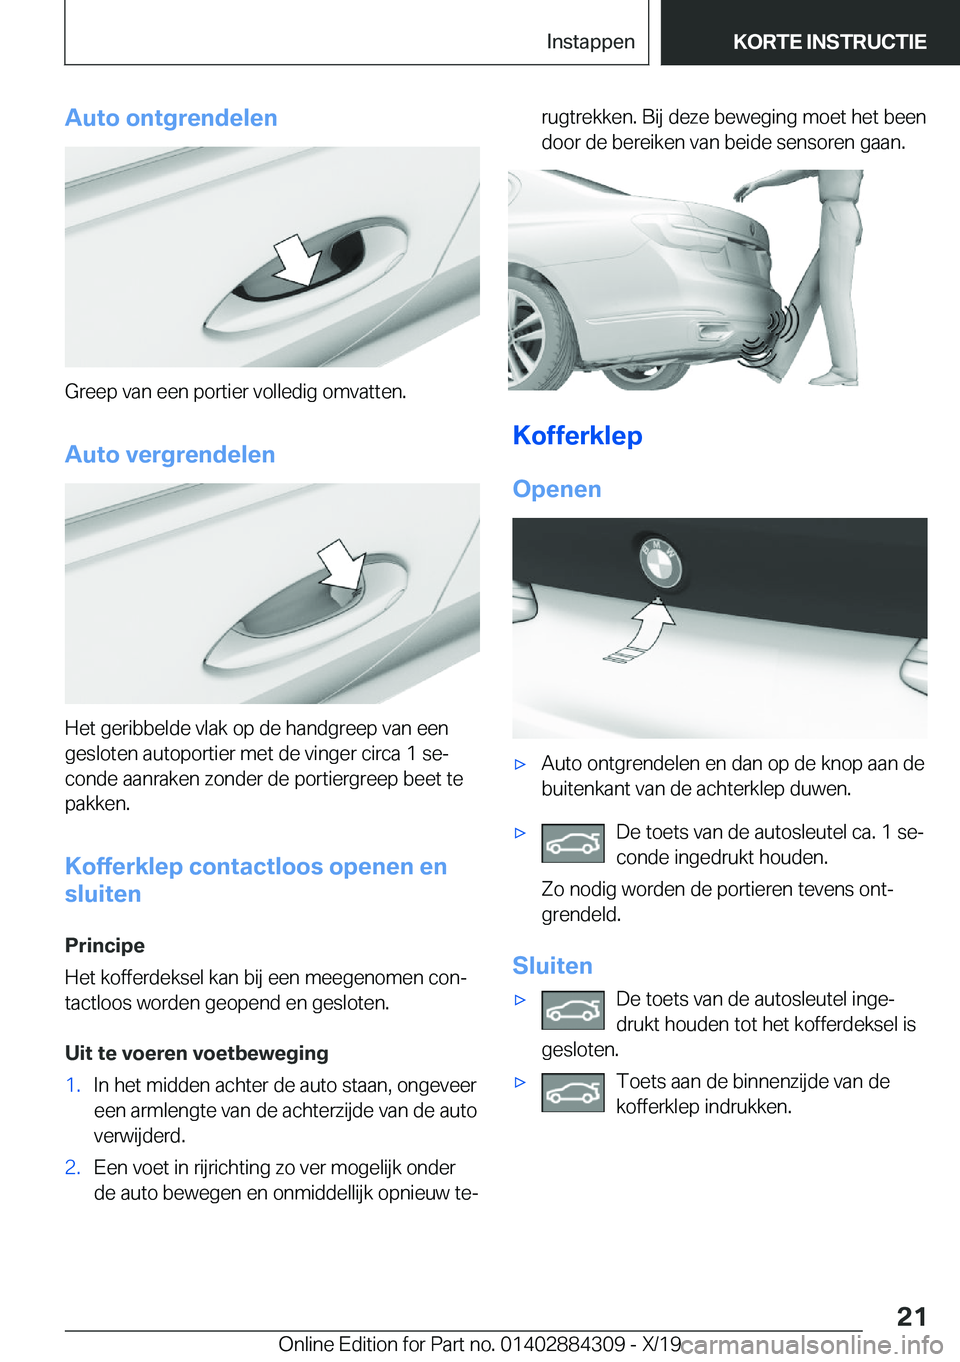 BMW 8 SERIES GRAN COUPE 2020  Instructieboekjes (in Dutch) �A�u�t�o��o�n�t�g�r�e�n�d�e�l�e�n
�G�r�e�e�p��v�a�n��e�e�n��p�o�r�t�i�e�r��v�o�l�l�e�d�i�g��o�m�v�a�t�t�e�n�.�A�u�t�o��v�e�r�g�r�e�n�d�e�l�e�n
�H�e�t��g�e�r�i�b�b�e�l�d�e��v�l�a�k��o�p��d�e